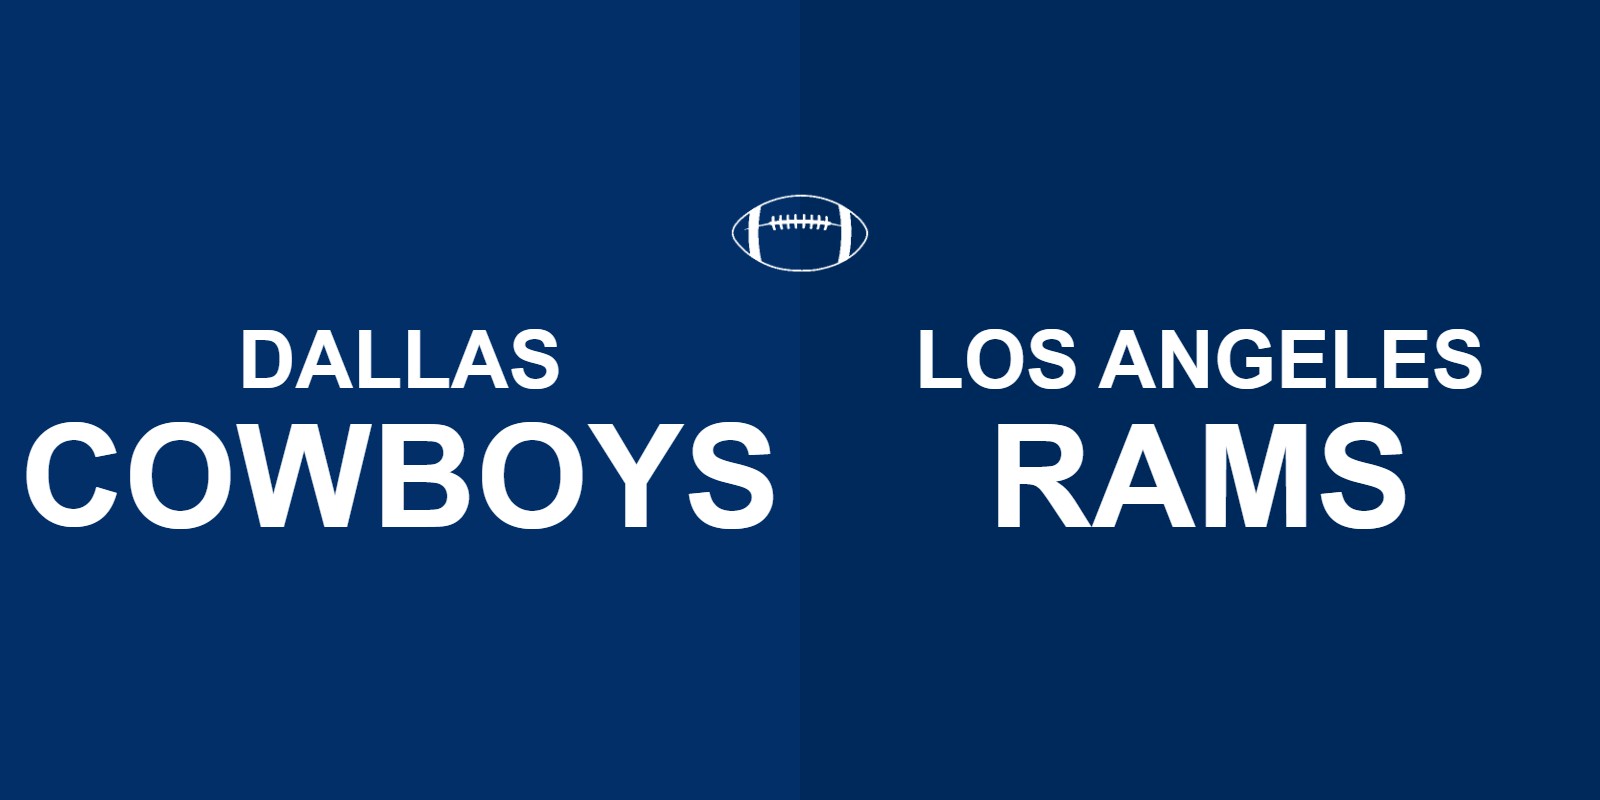 Cowboys vs Rams